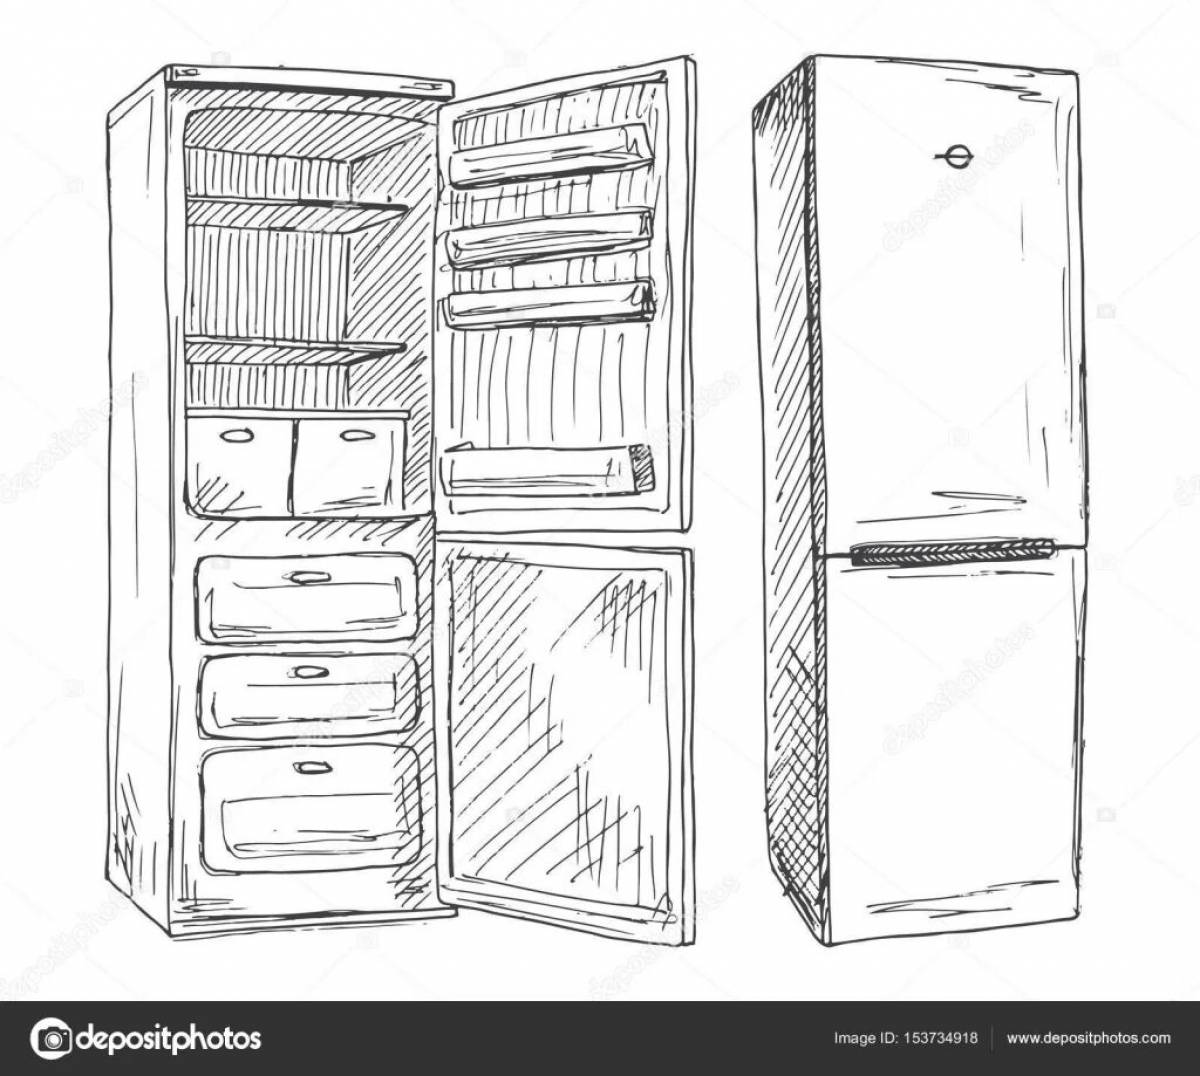 Smart fridge coloring page